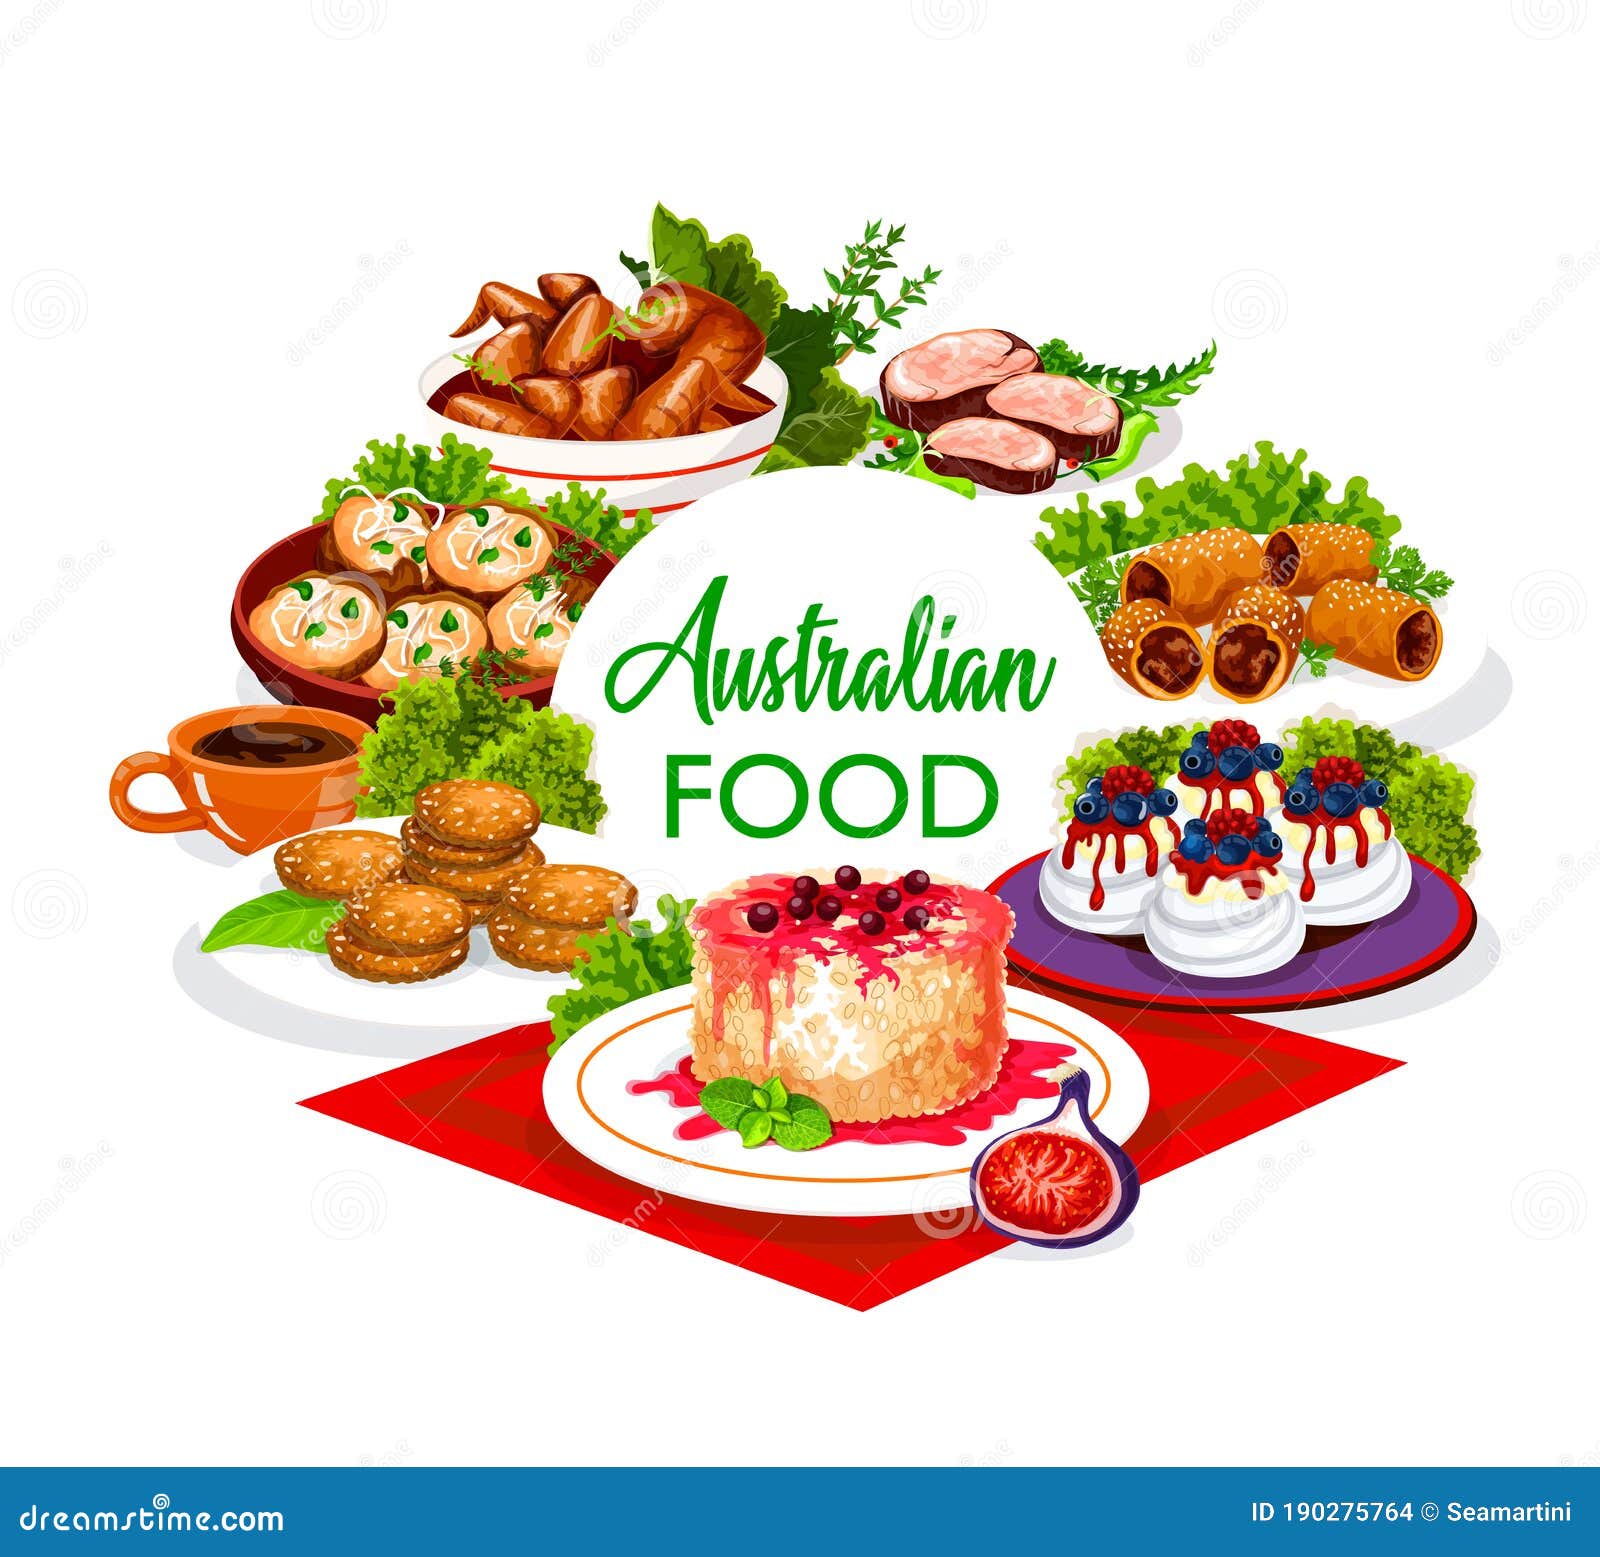 Australian Cuisine Food, Lunch, Dinner Meals Stock Vector - Illustration of lunch, australia: 190275764